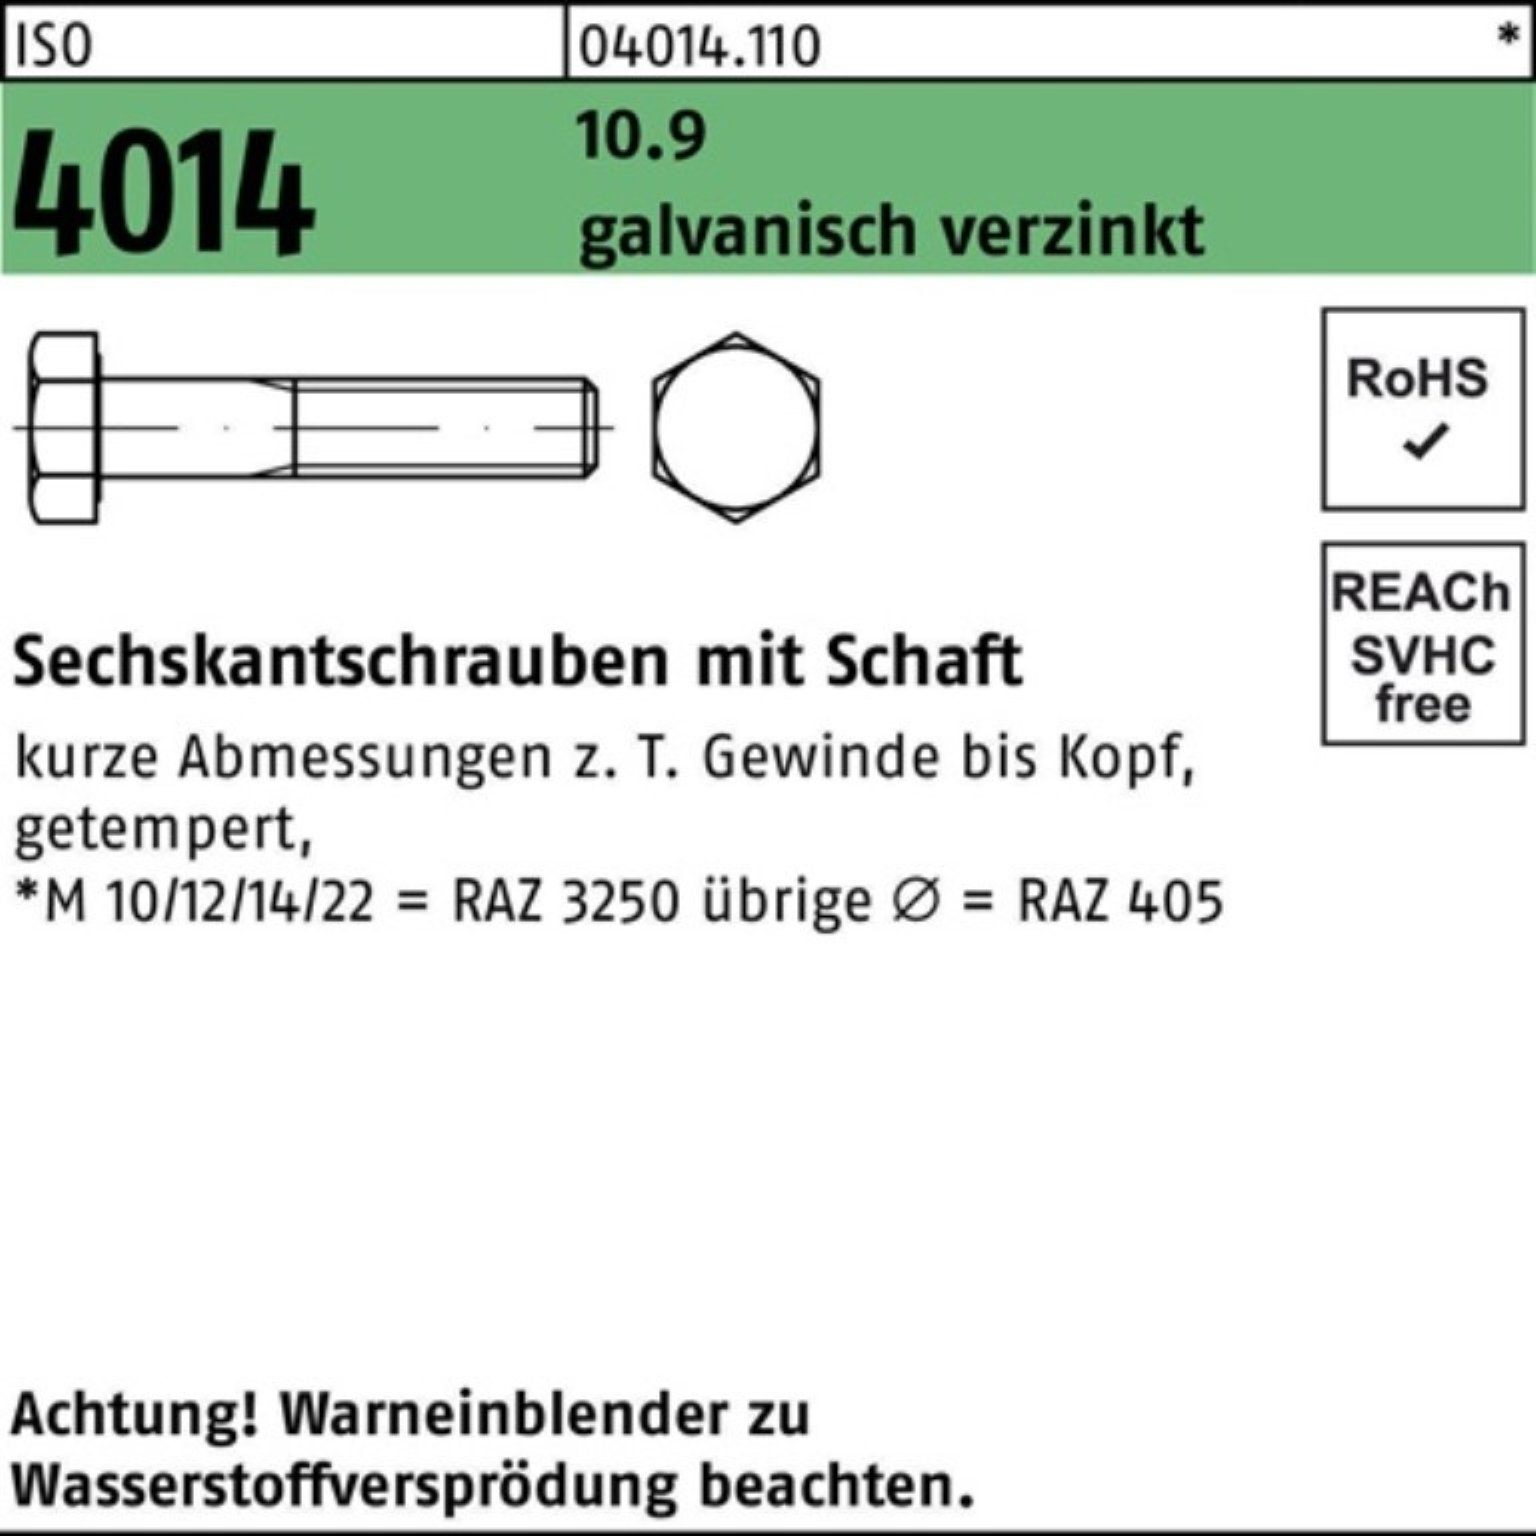 Bufab Sechskantschraube 100er Pack Sechskantschraube ISO 4014 Schaft M12x 200 10.9 galv.verz. | Schrauben